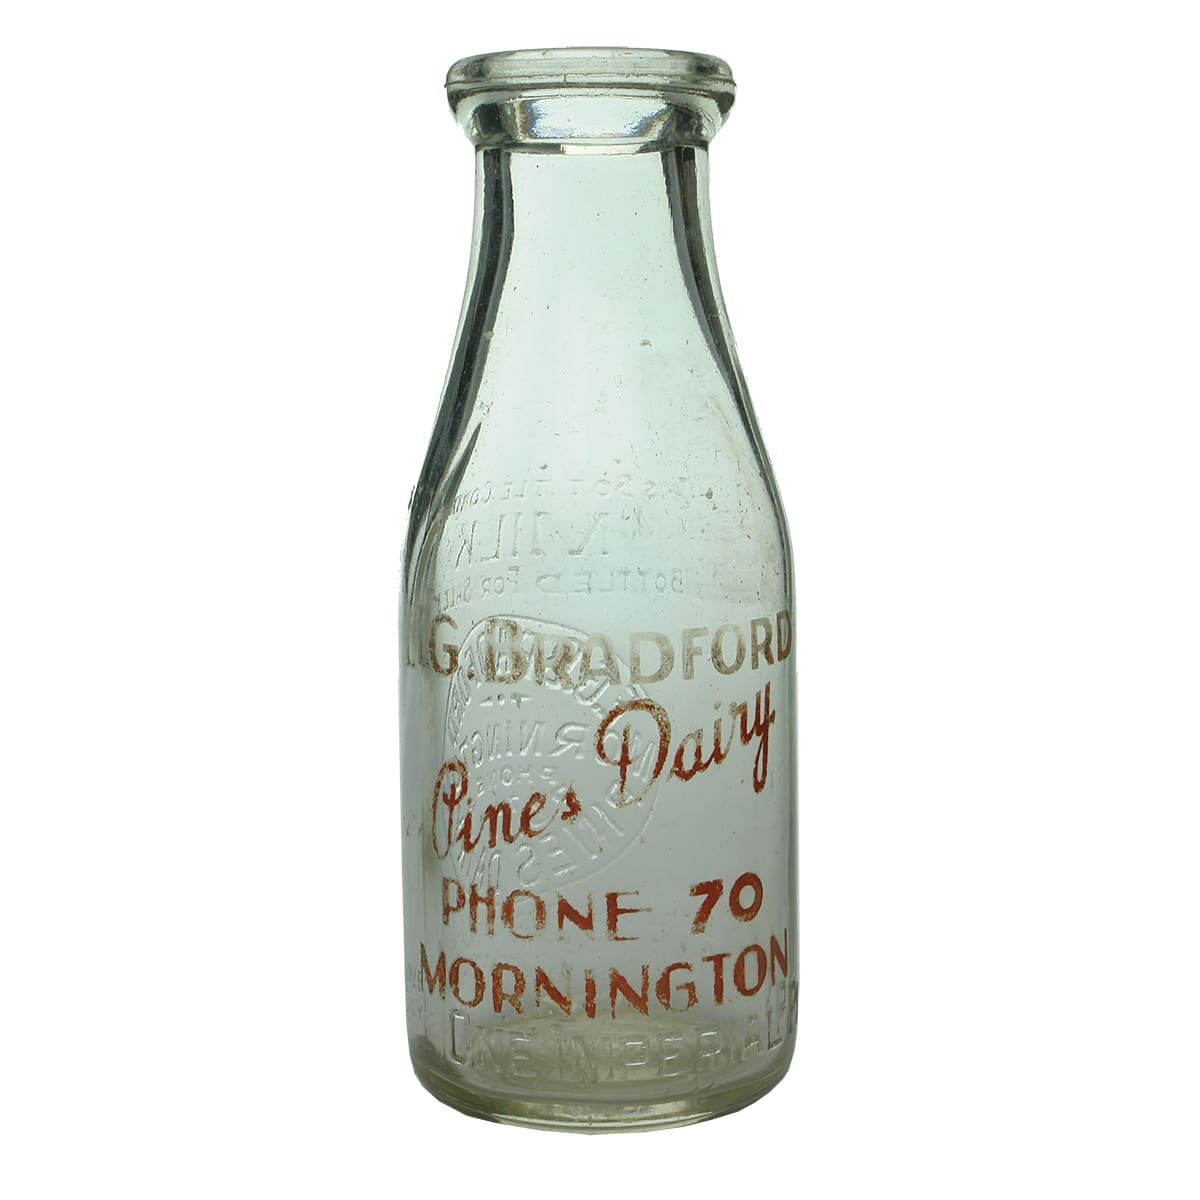 Milk. E. G. Bradford, Pines Dairy, Mornington. Wad lip. Ceramic Label. 1 Pint.